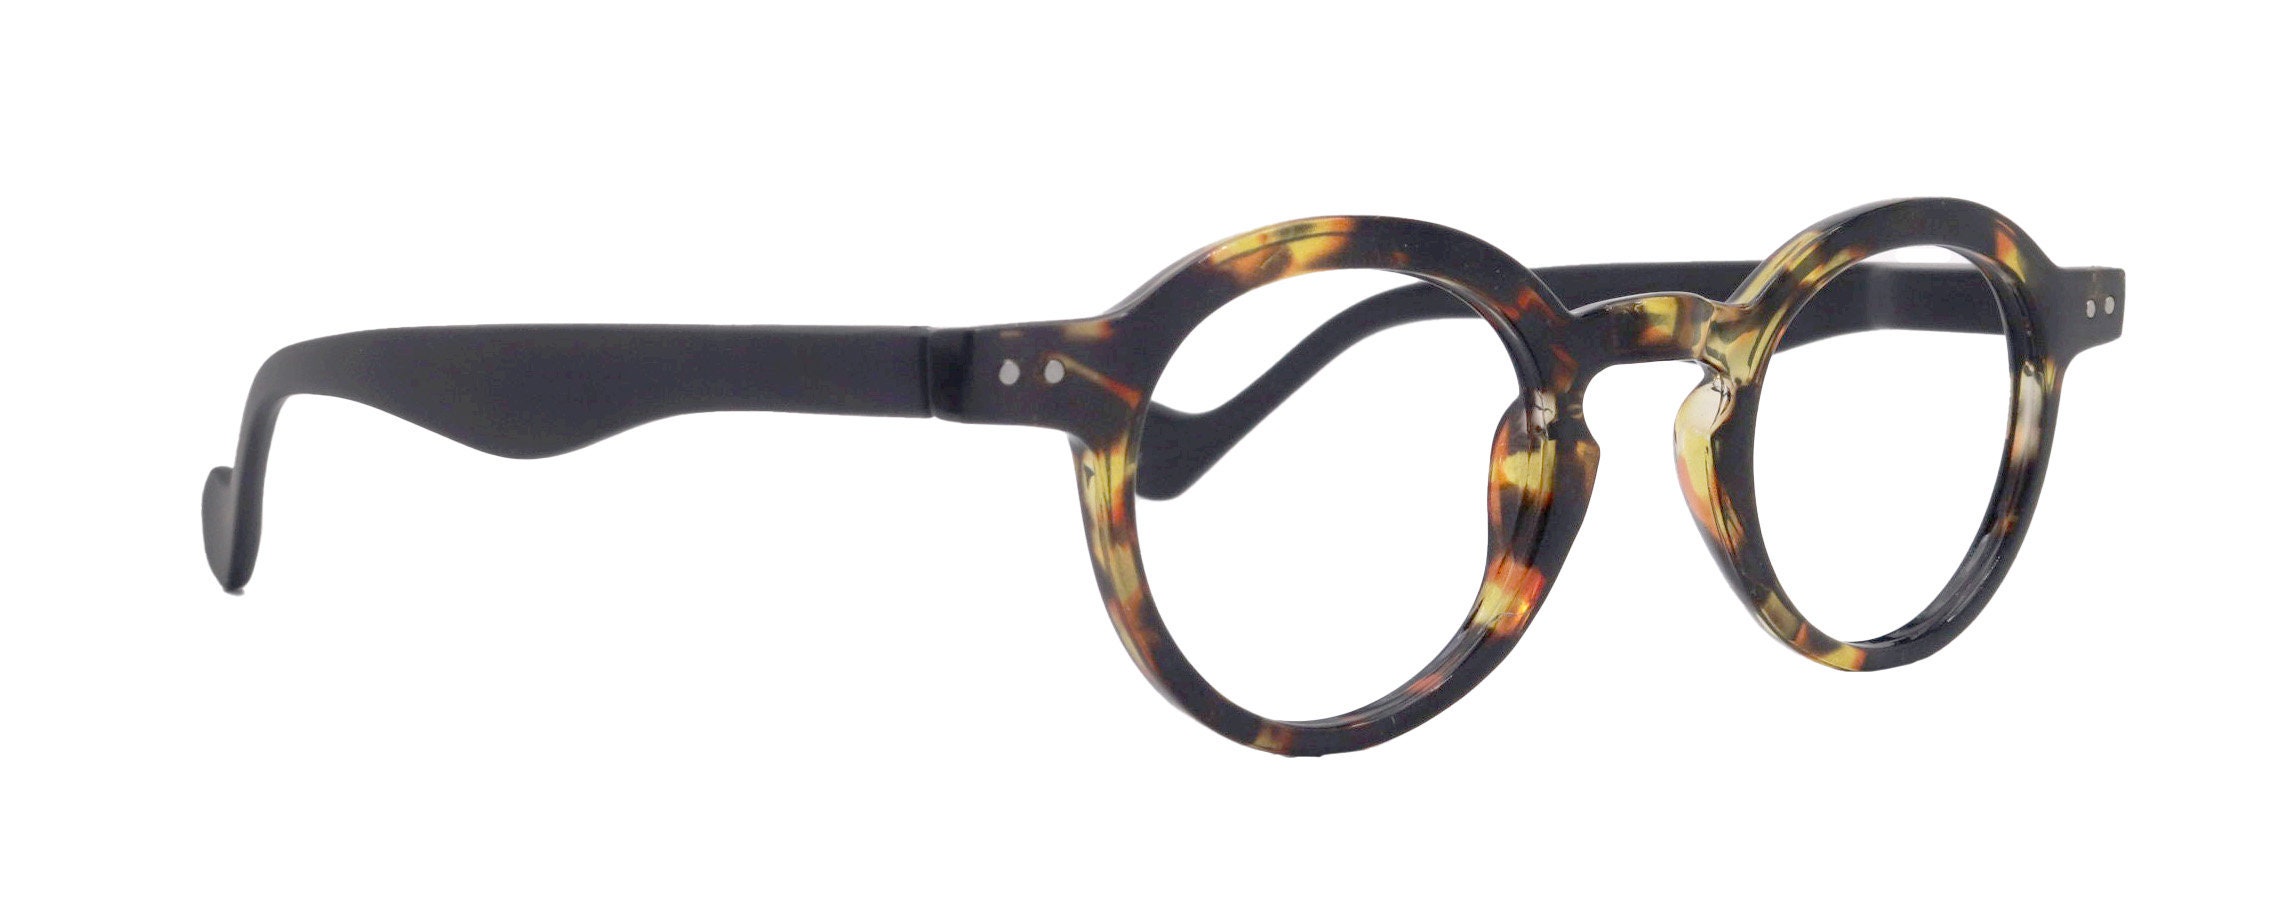 Orlando (Premium) Reading Glasses, High End Readers (Black) (Round) Magnifying Eyeglasses, Optical, NY Fifth Avenue-MER23391BK_275